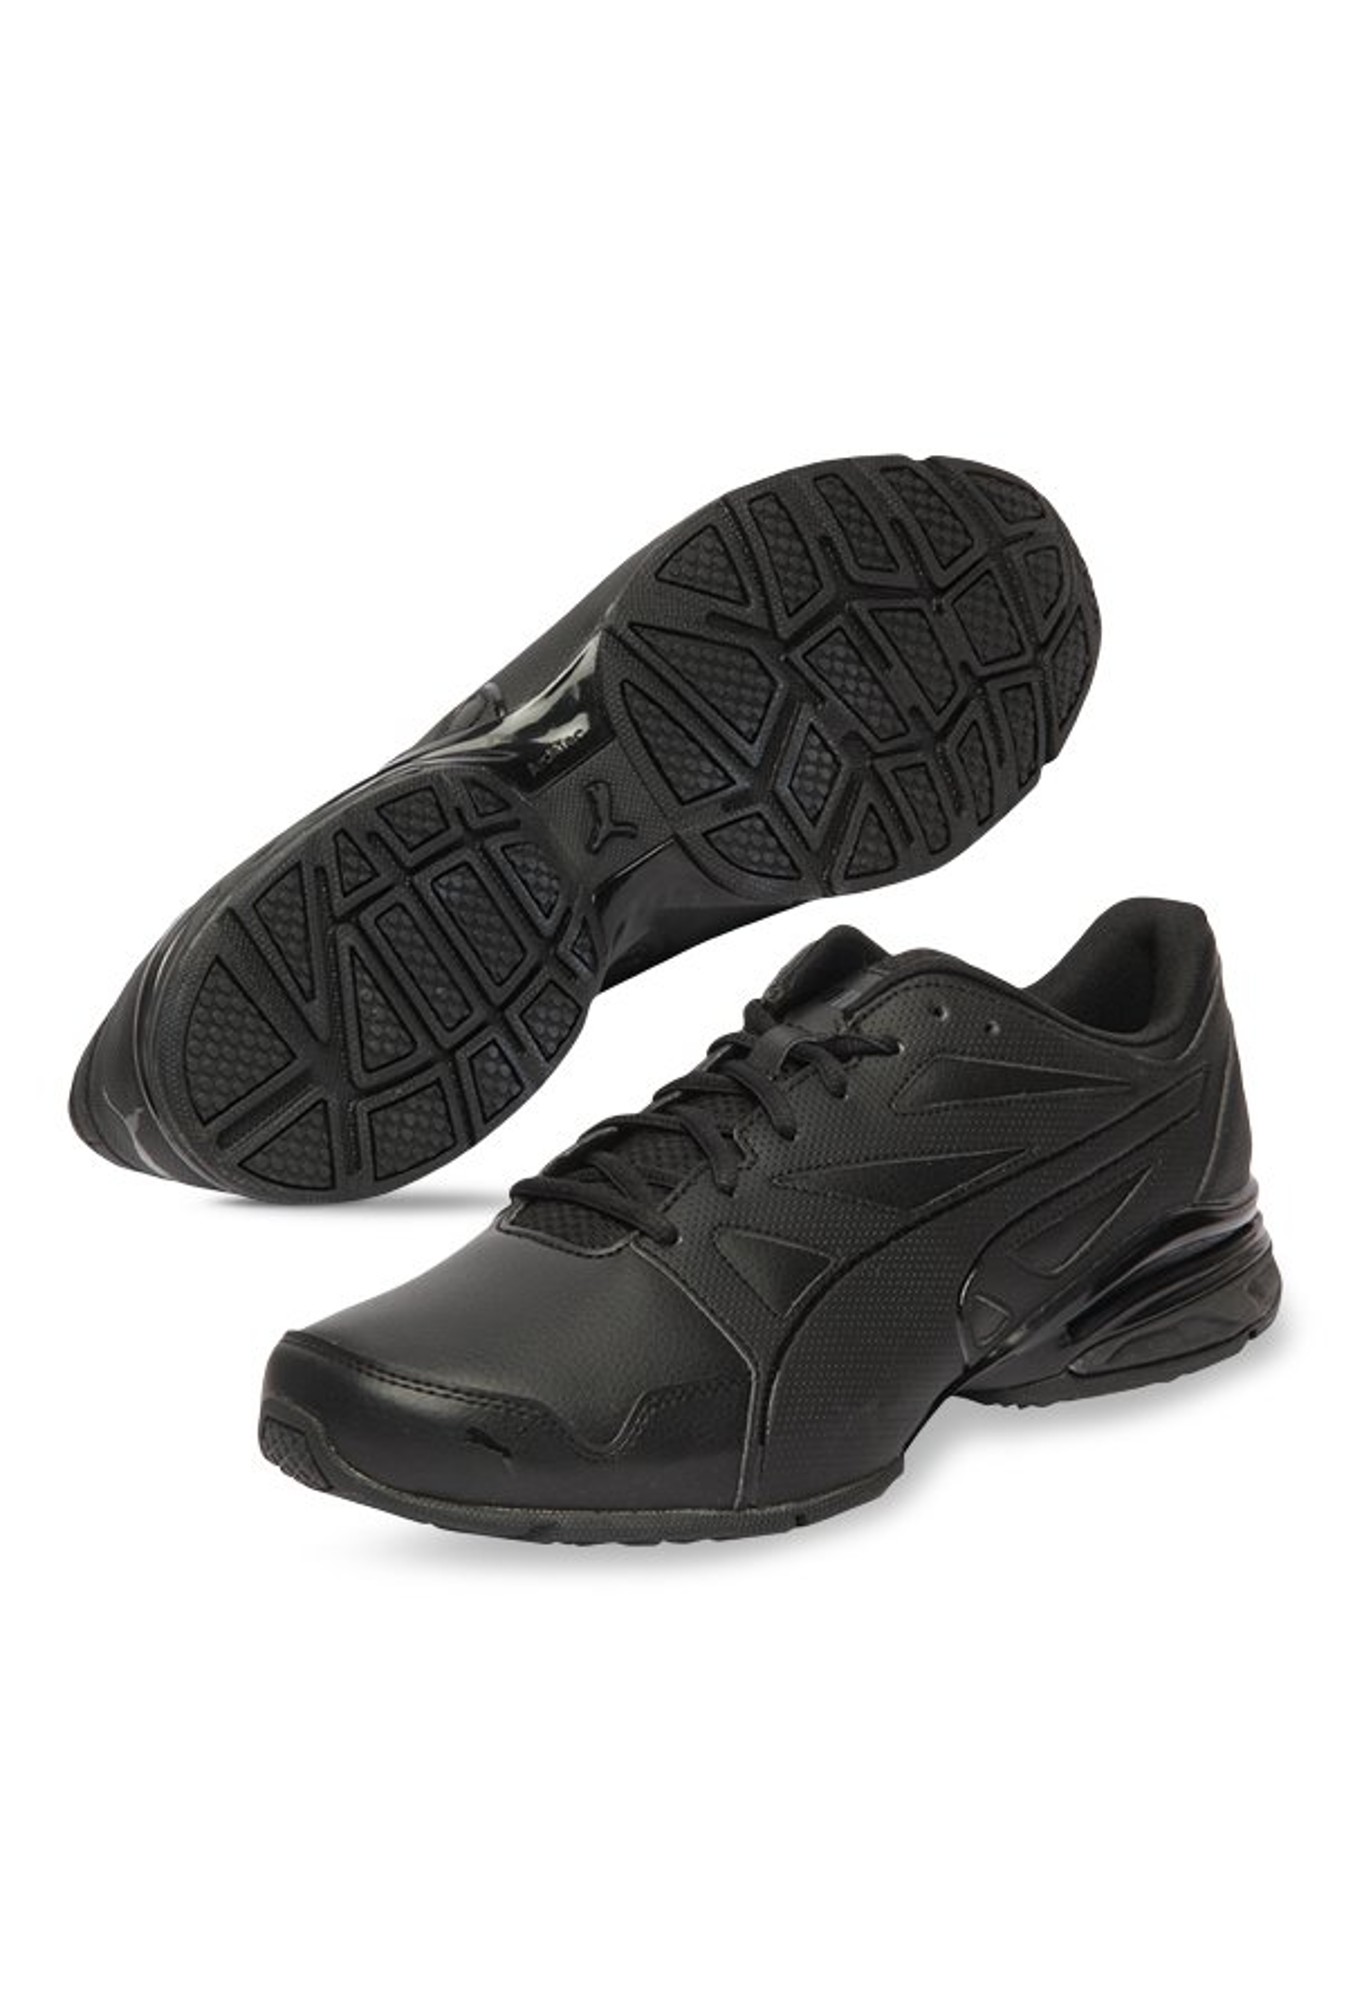 puma men's tazon modern fracture black running shoes